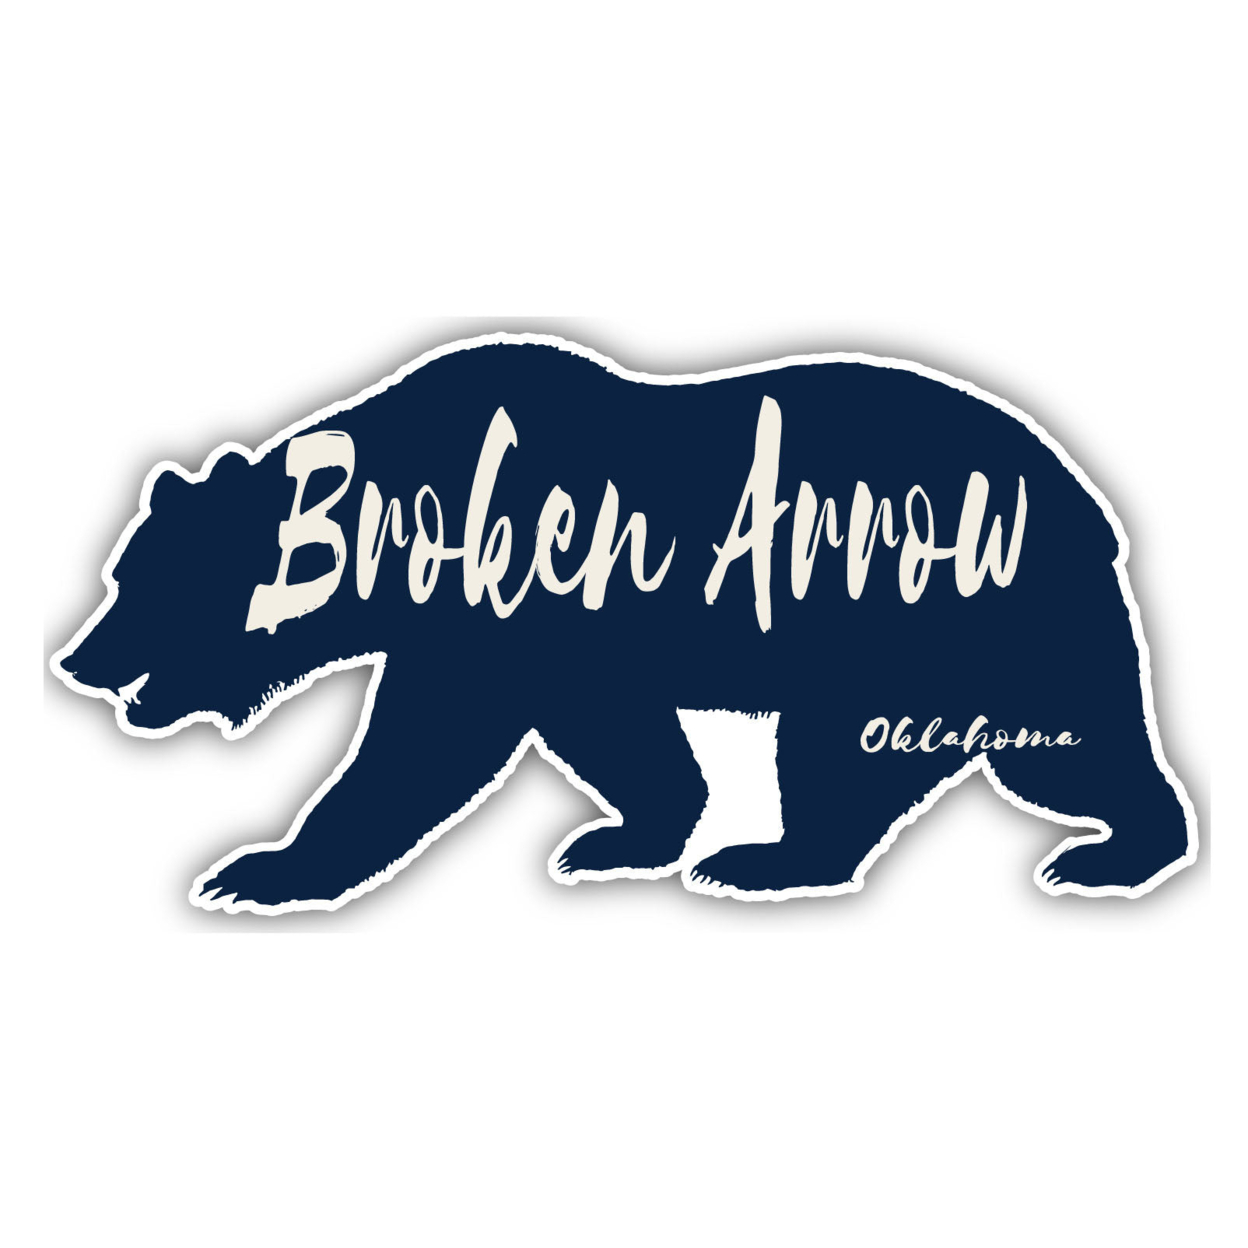 Broken Arrow Oklahoma Souvenir Decorative Stickers (Choose Theme And Size) - Single Unit, 4-Inch, Bear